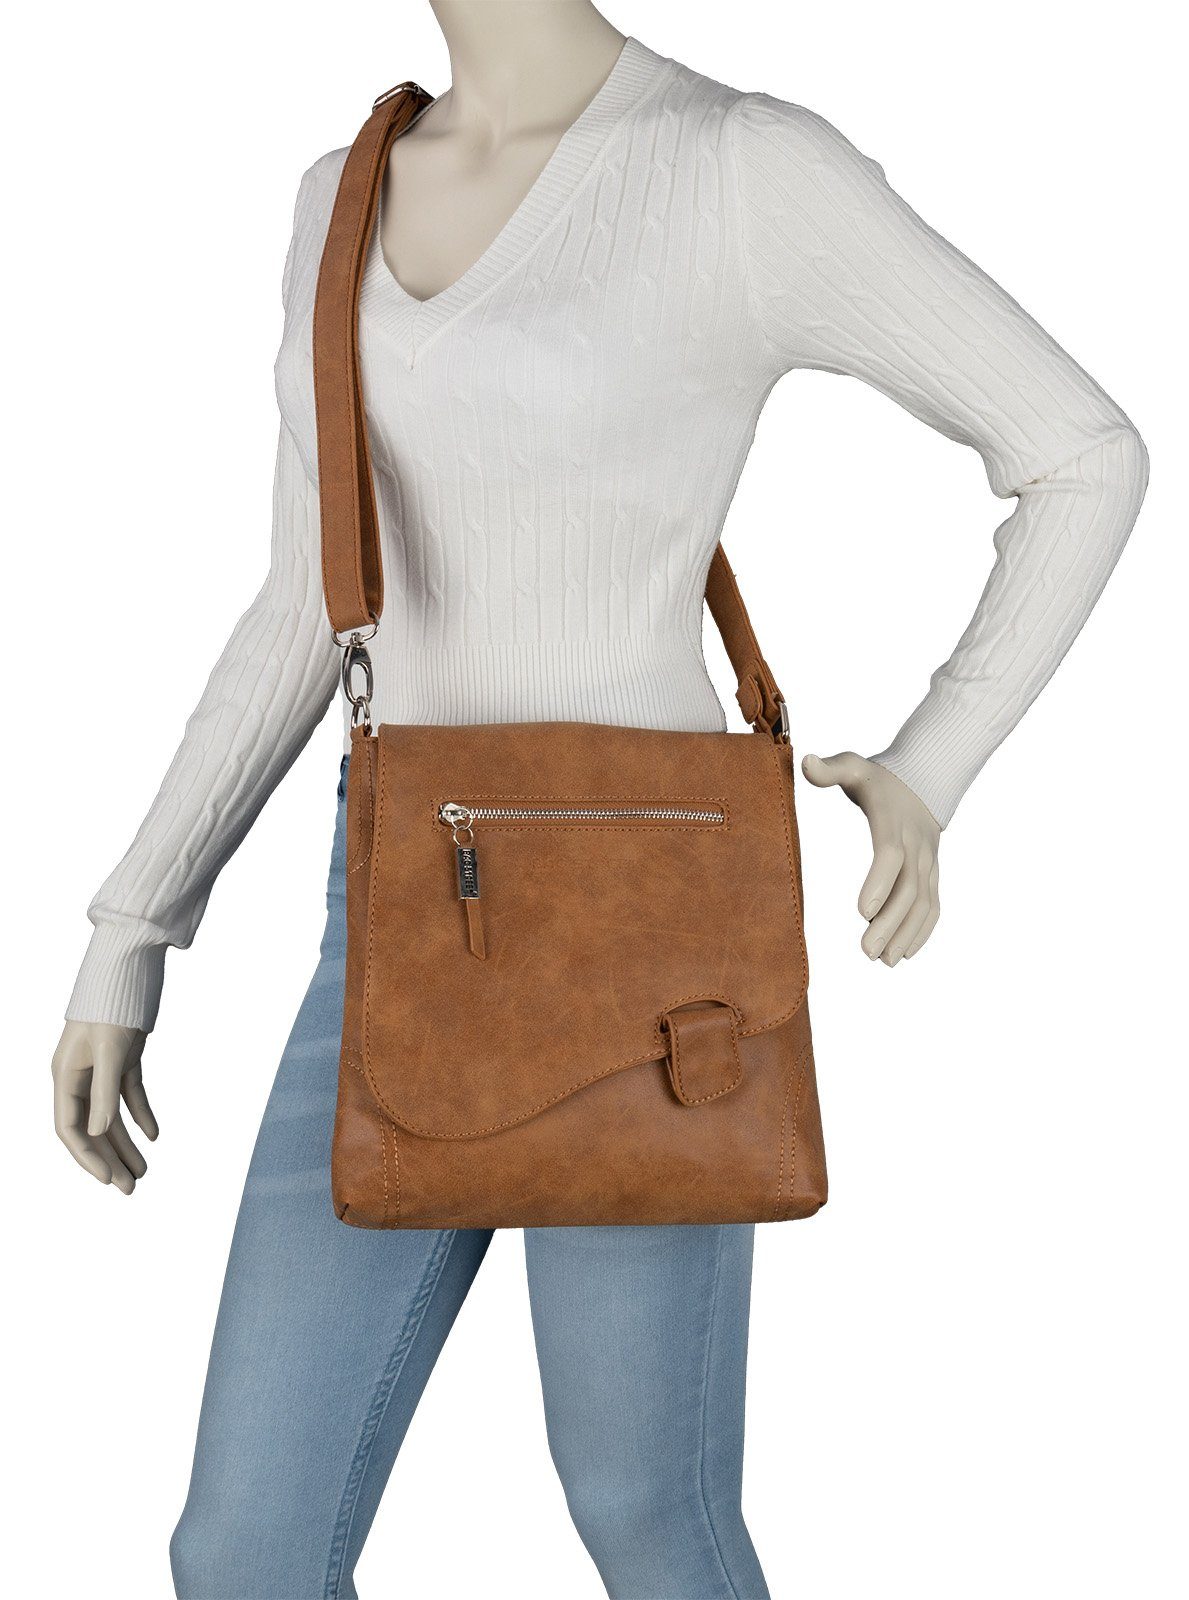 COGNAC Umhängetasche tragbar Schultertasche Street Damentasche BAG Bag Umhängetasche Schultertasche, T0104, Handtasche Schlüsseltasche als STREET